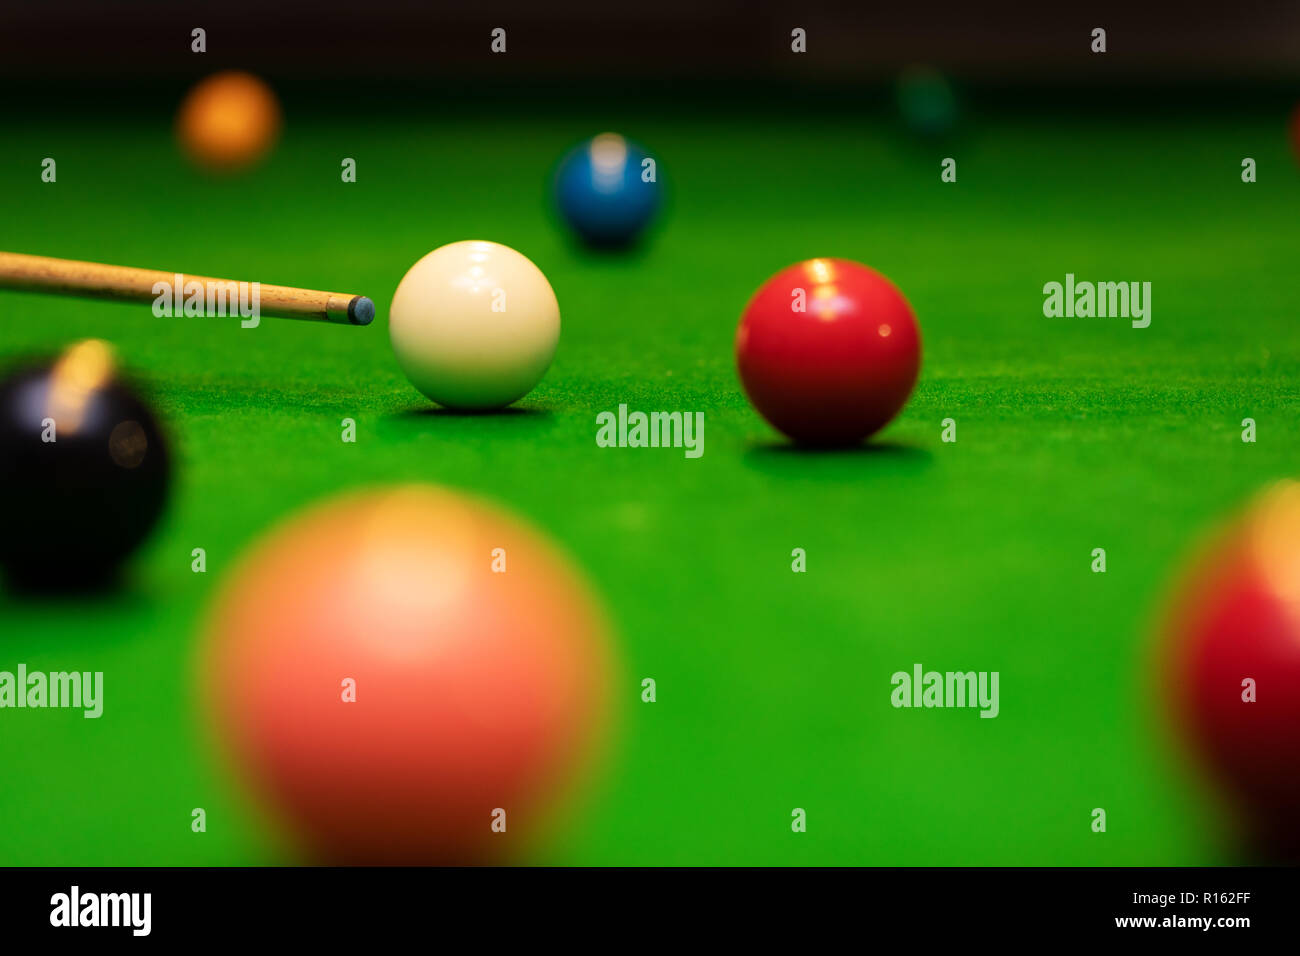 Snooker Spiel geschossen - Spieler mit dem Ziel, die weiße Kugel Stockfoto